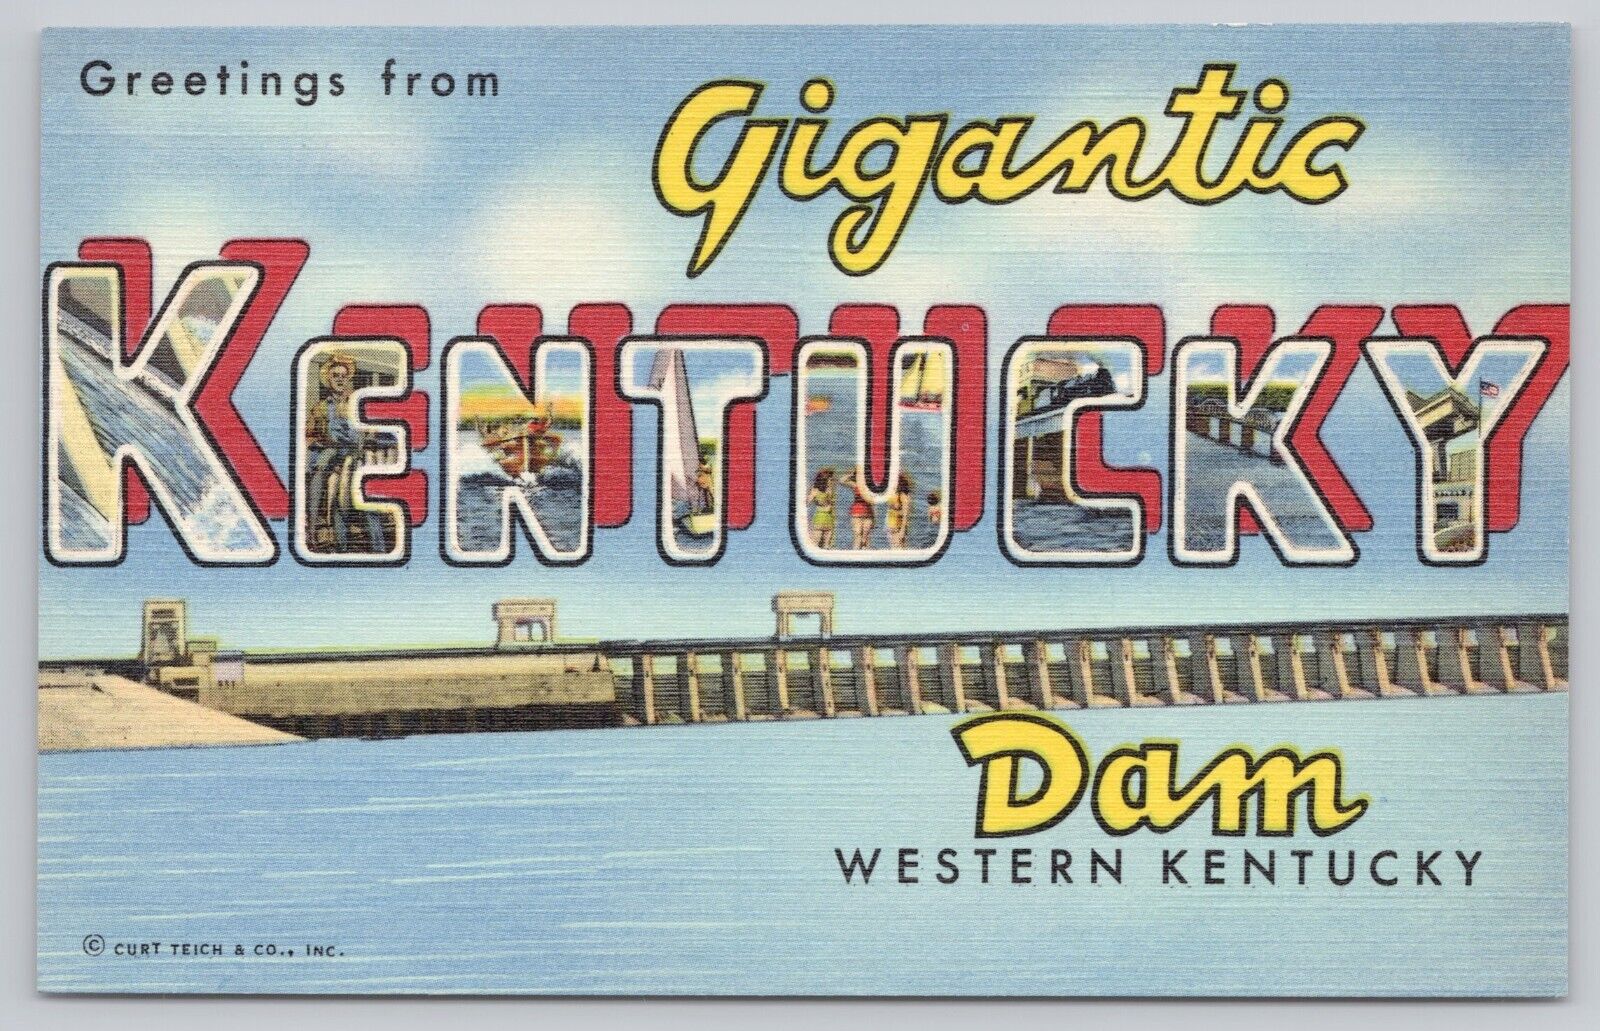 Gigantic Kentucky Dam, Large Letter Greetings, Vintage Postcard